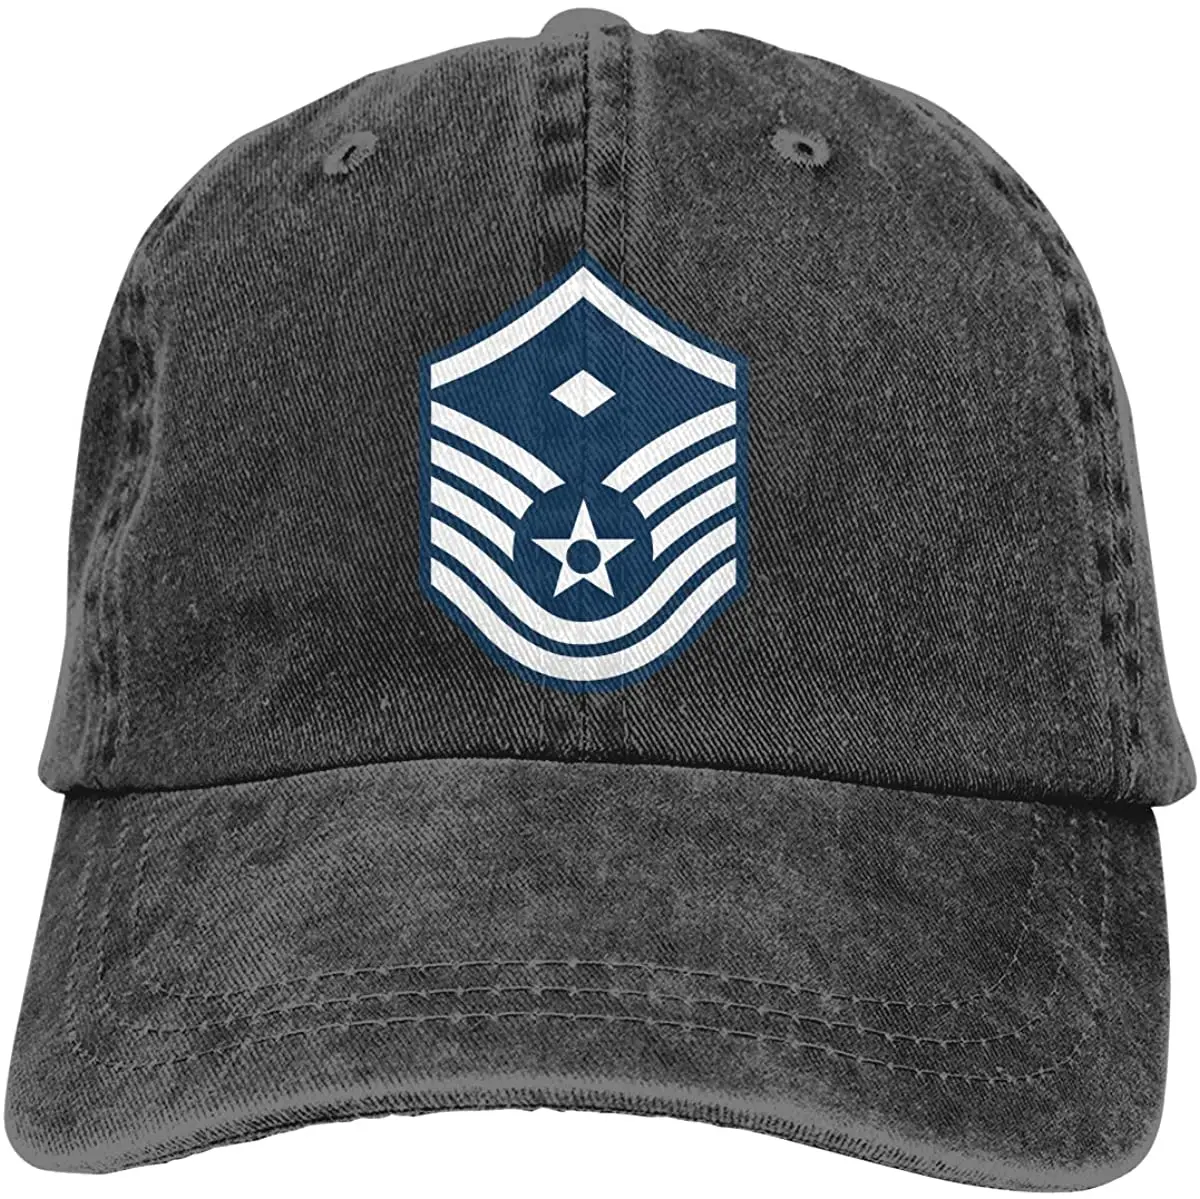 

Air Force Master Sergeant 1st SGT Diamond Rank Unisex Soft Casquette Cap Vintage Adjustable Baseball Caps